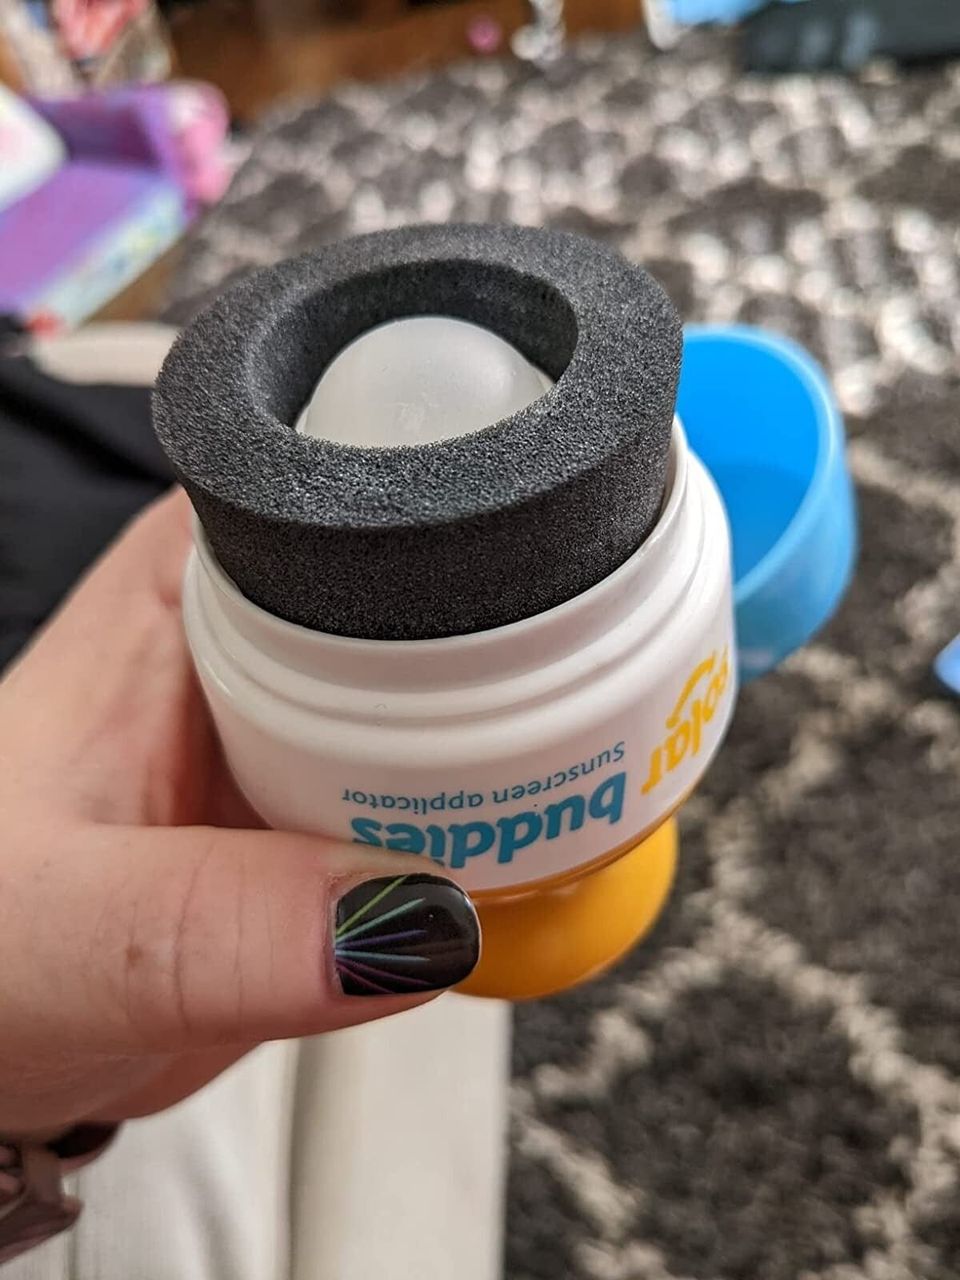 A refillable roll-on sponge sunscreen applicator